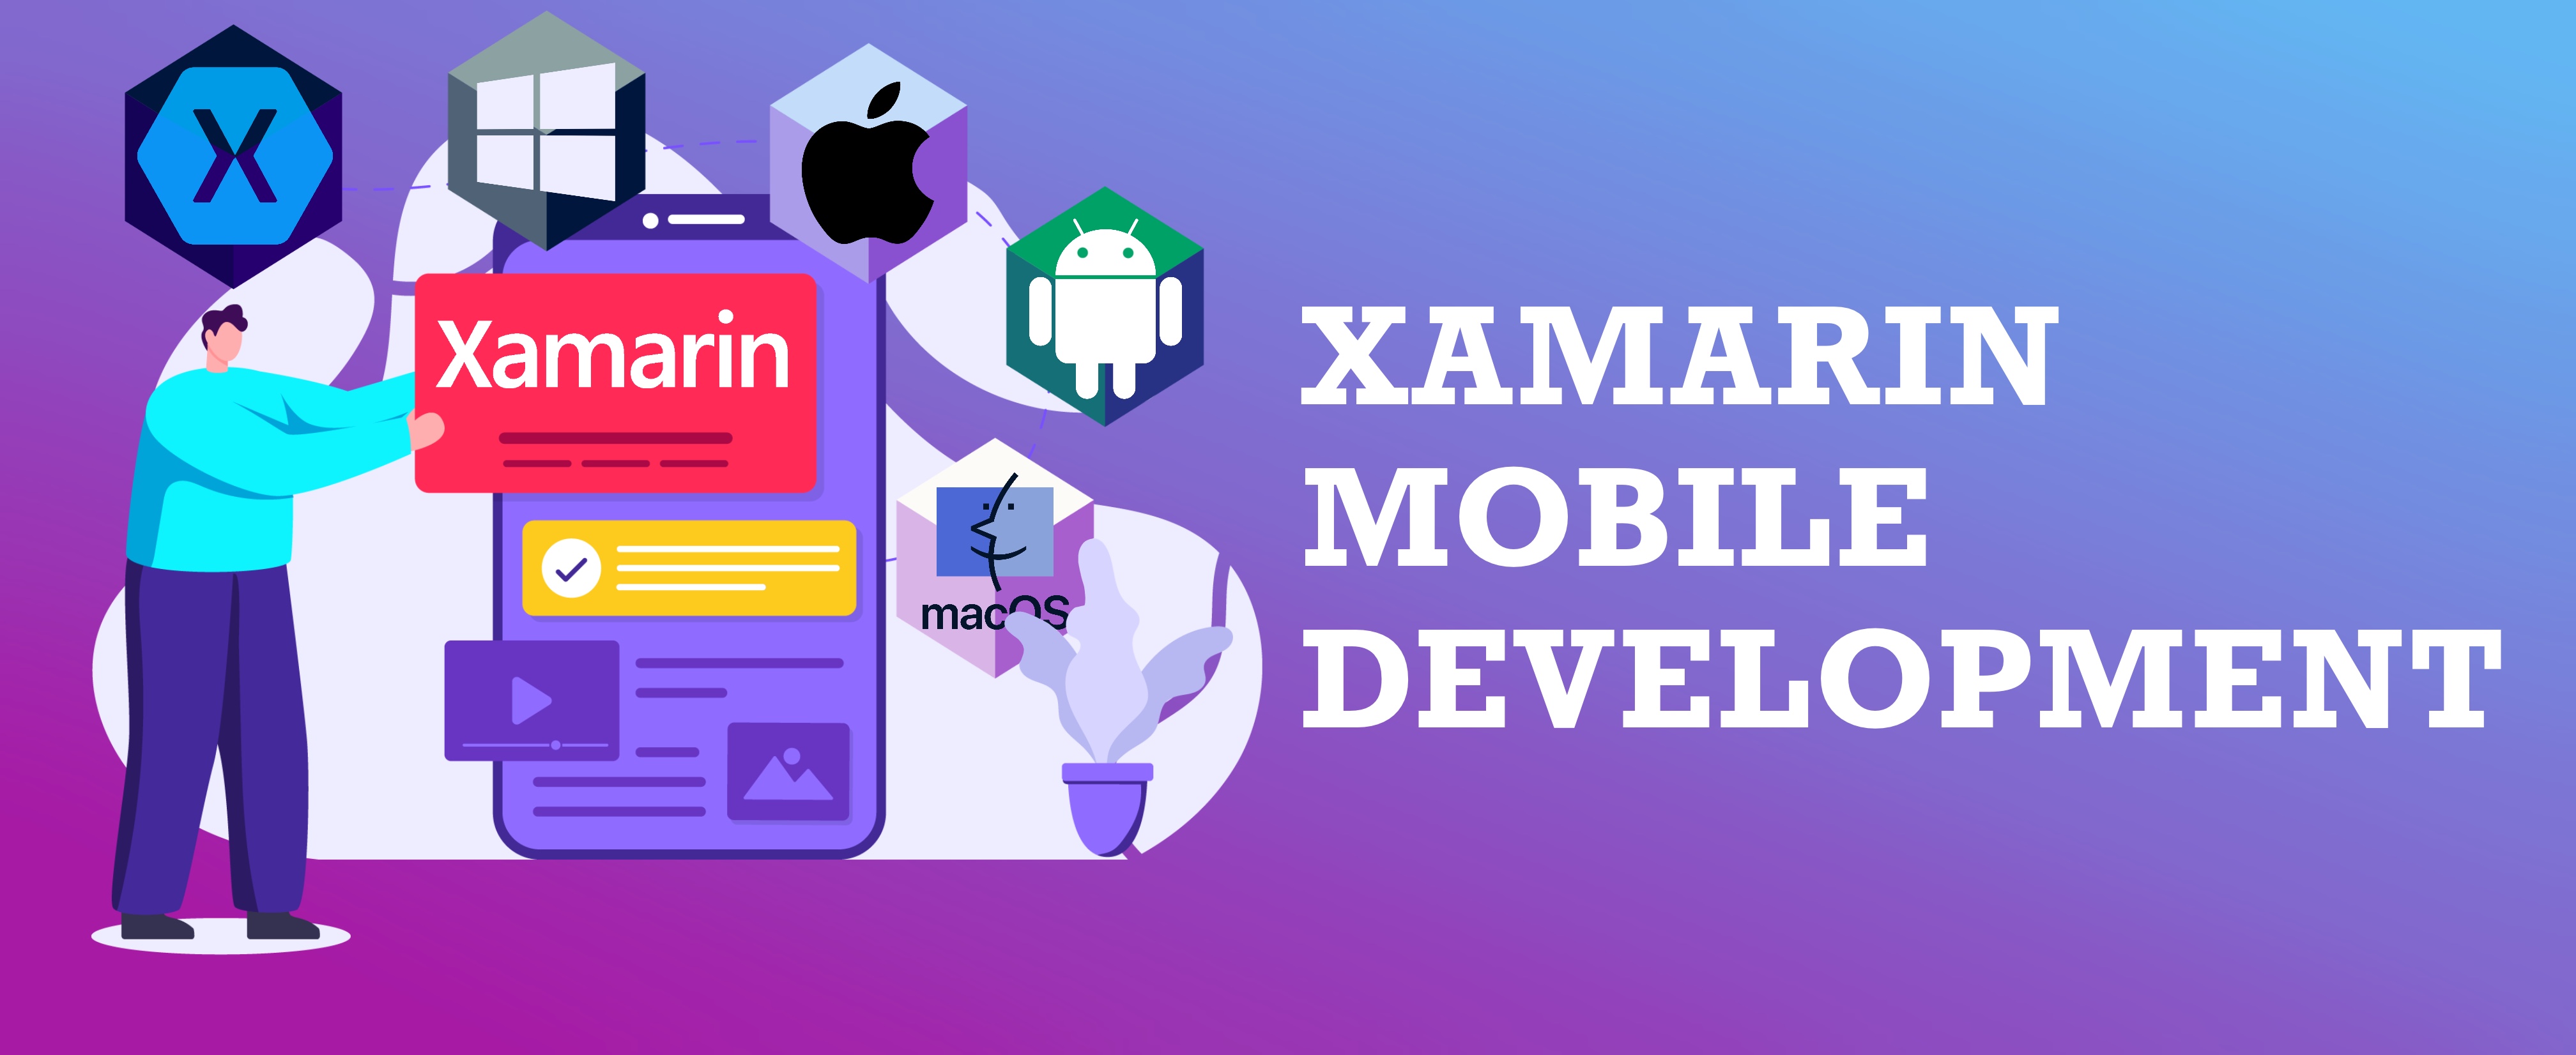 Indie Game Developers Get Xamarin for Free - Xamarin Blog